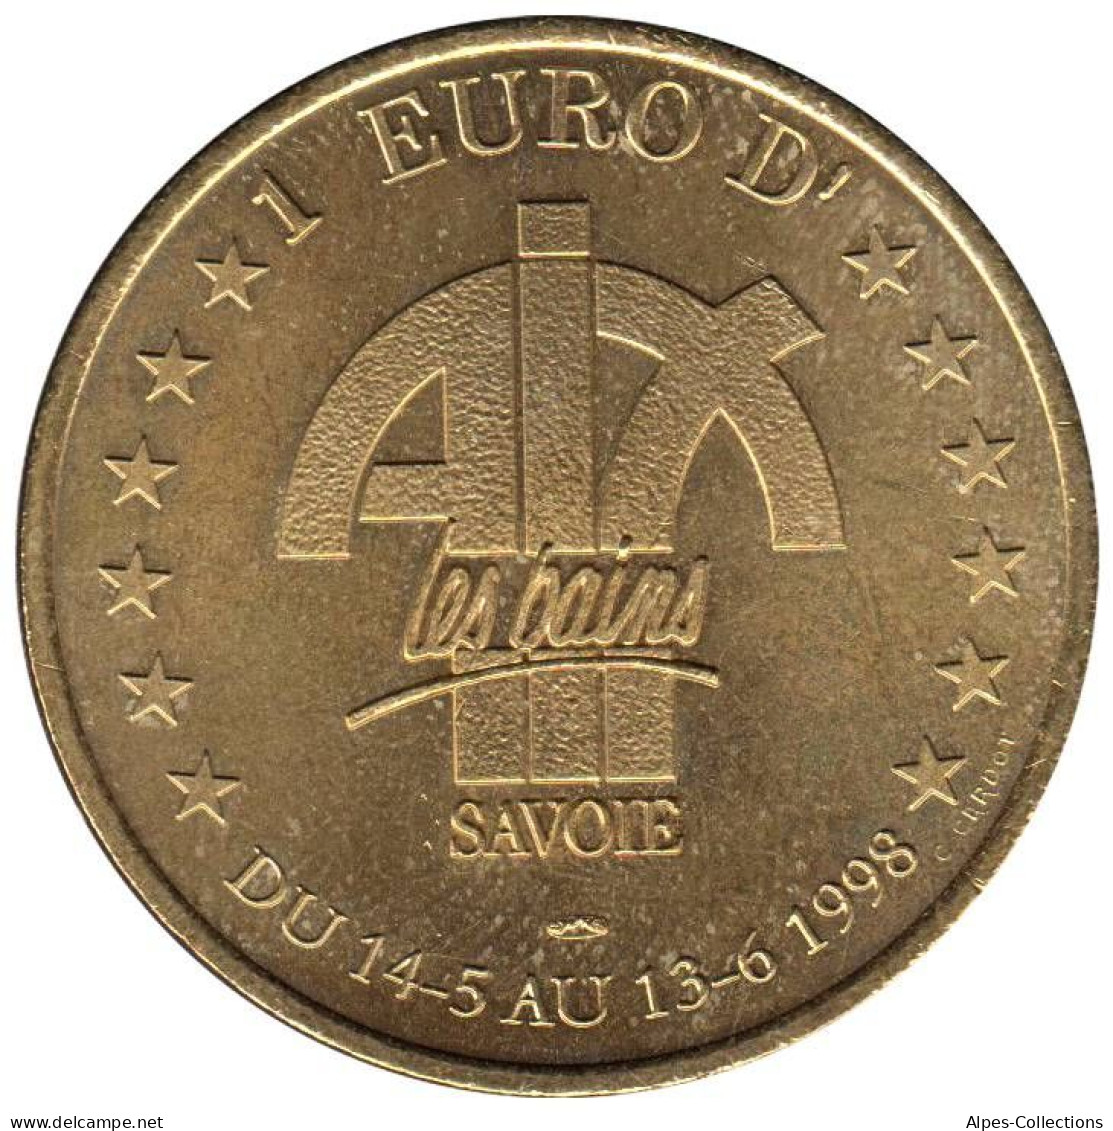 AIX LES BAINS - EU0010.2 - 1 EURO DES VILLES - Réf: T418 - 1998 - Euros Of The Cities